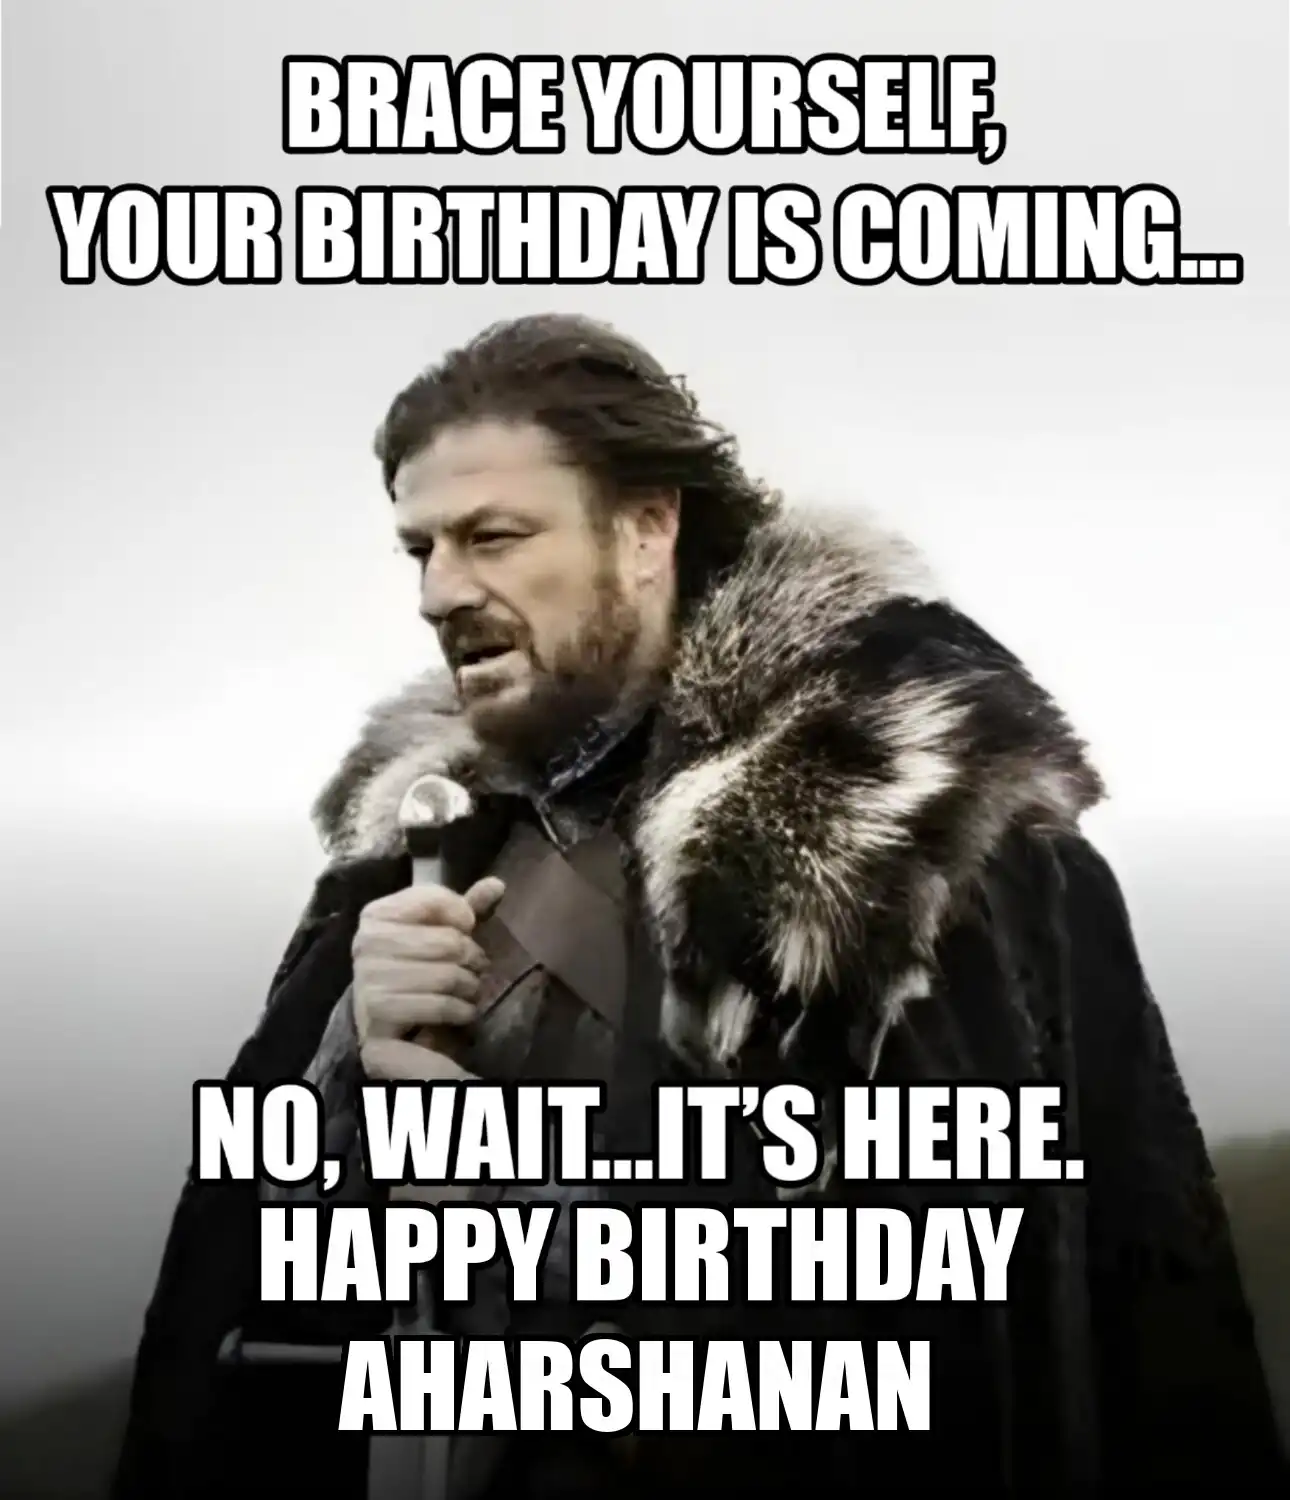 Happy Birthday Aharshanan Brace Yourself Your Birthday Is Coming Meme